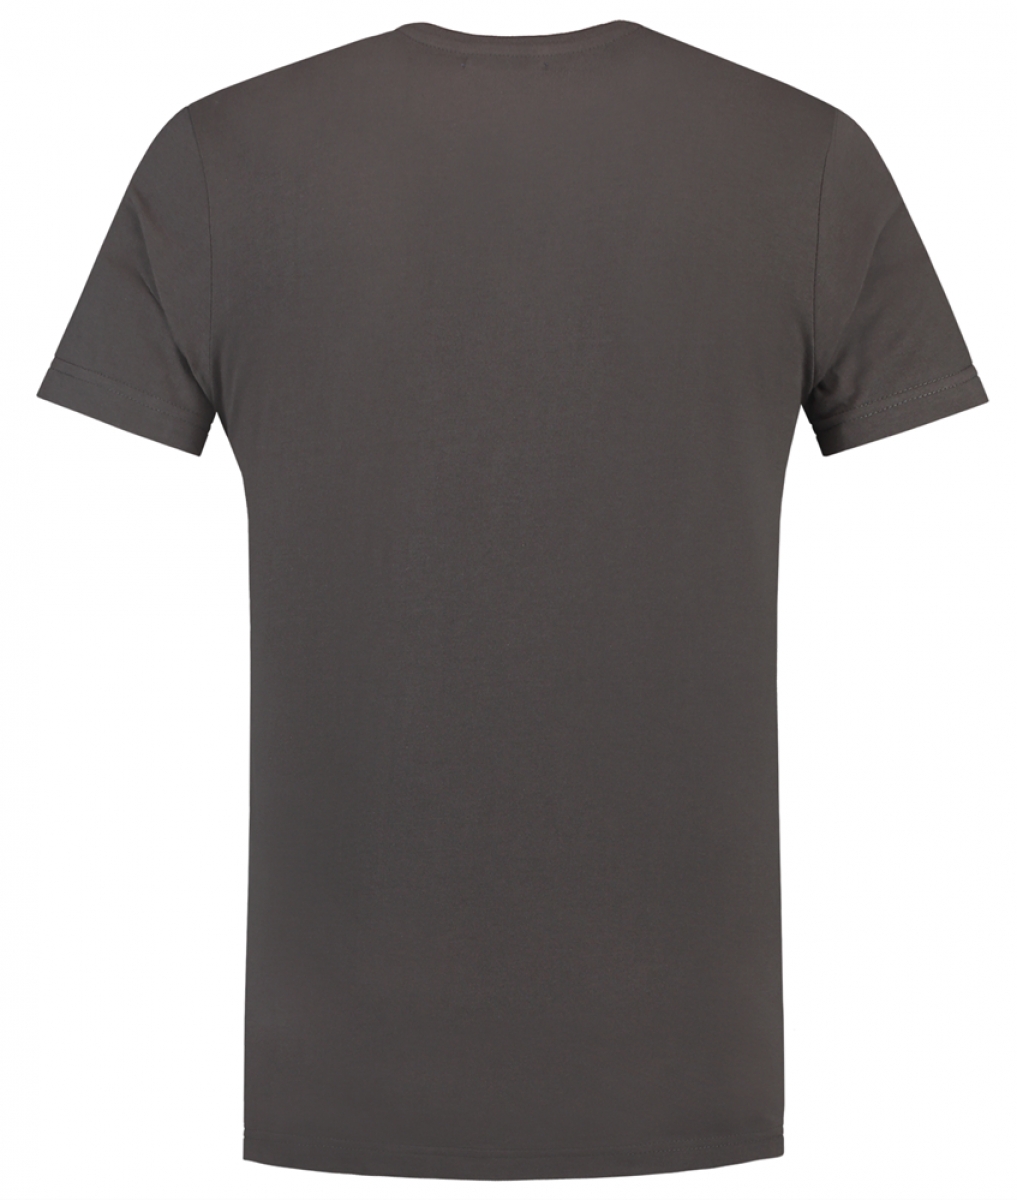 TRICORP-Worker-Shirts, T-Shirts, Slim Fit, 160 g/m, darkgrey